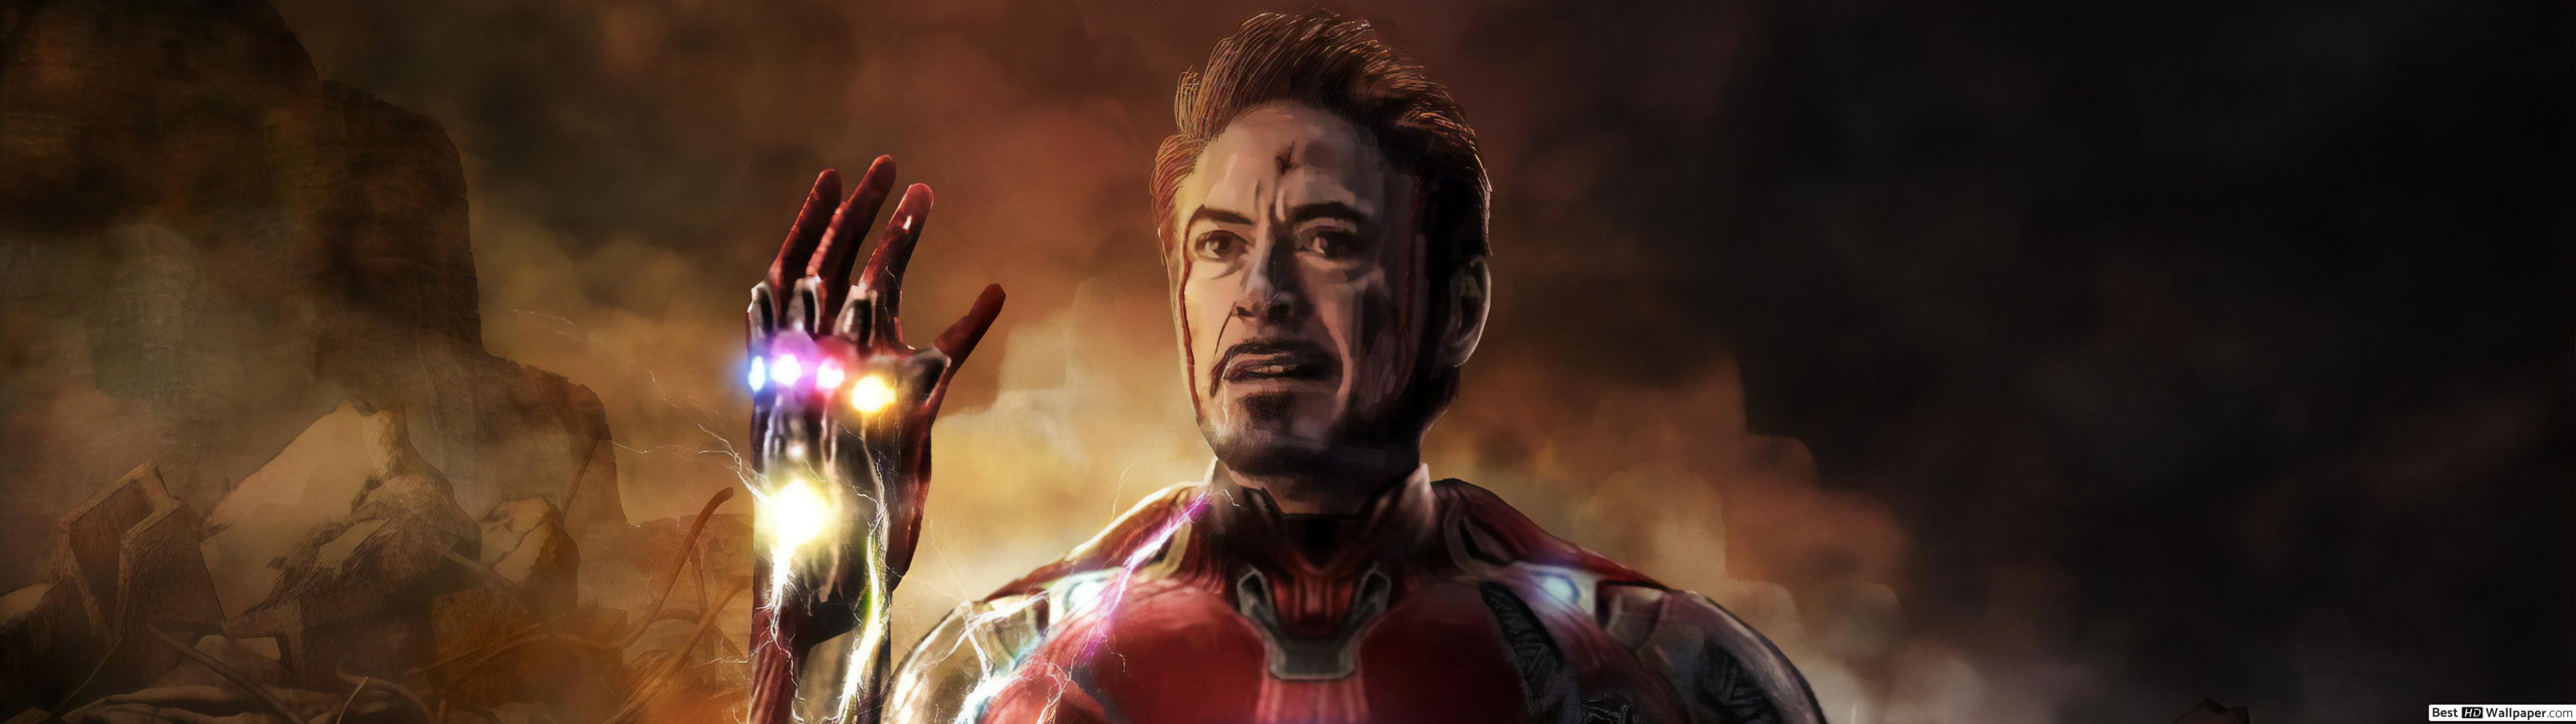 Iron Man Tony Stark Endgame - HD Wallpaper 